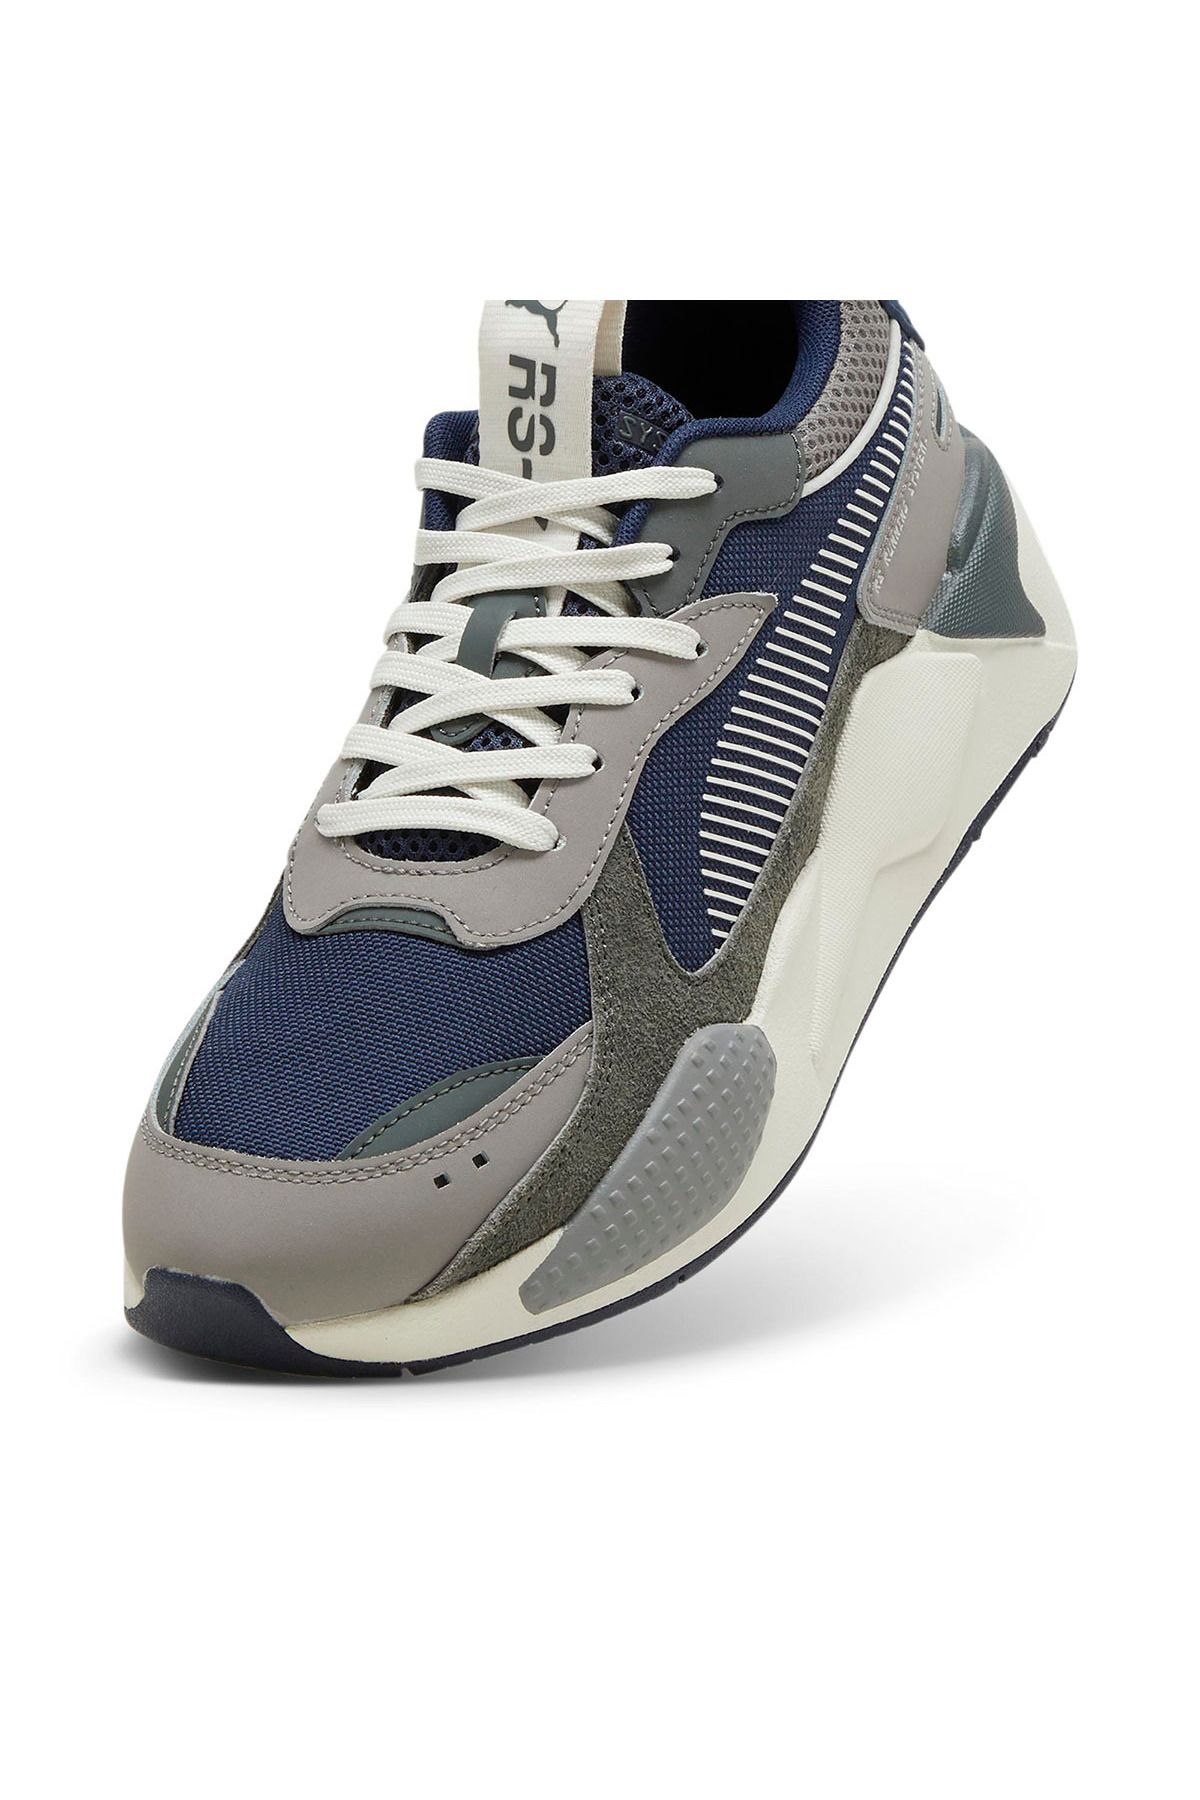 Puma کفش کتانی ورزشی مردانه مدل Rs X Suede